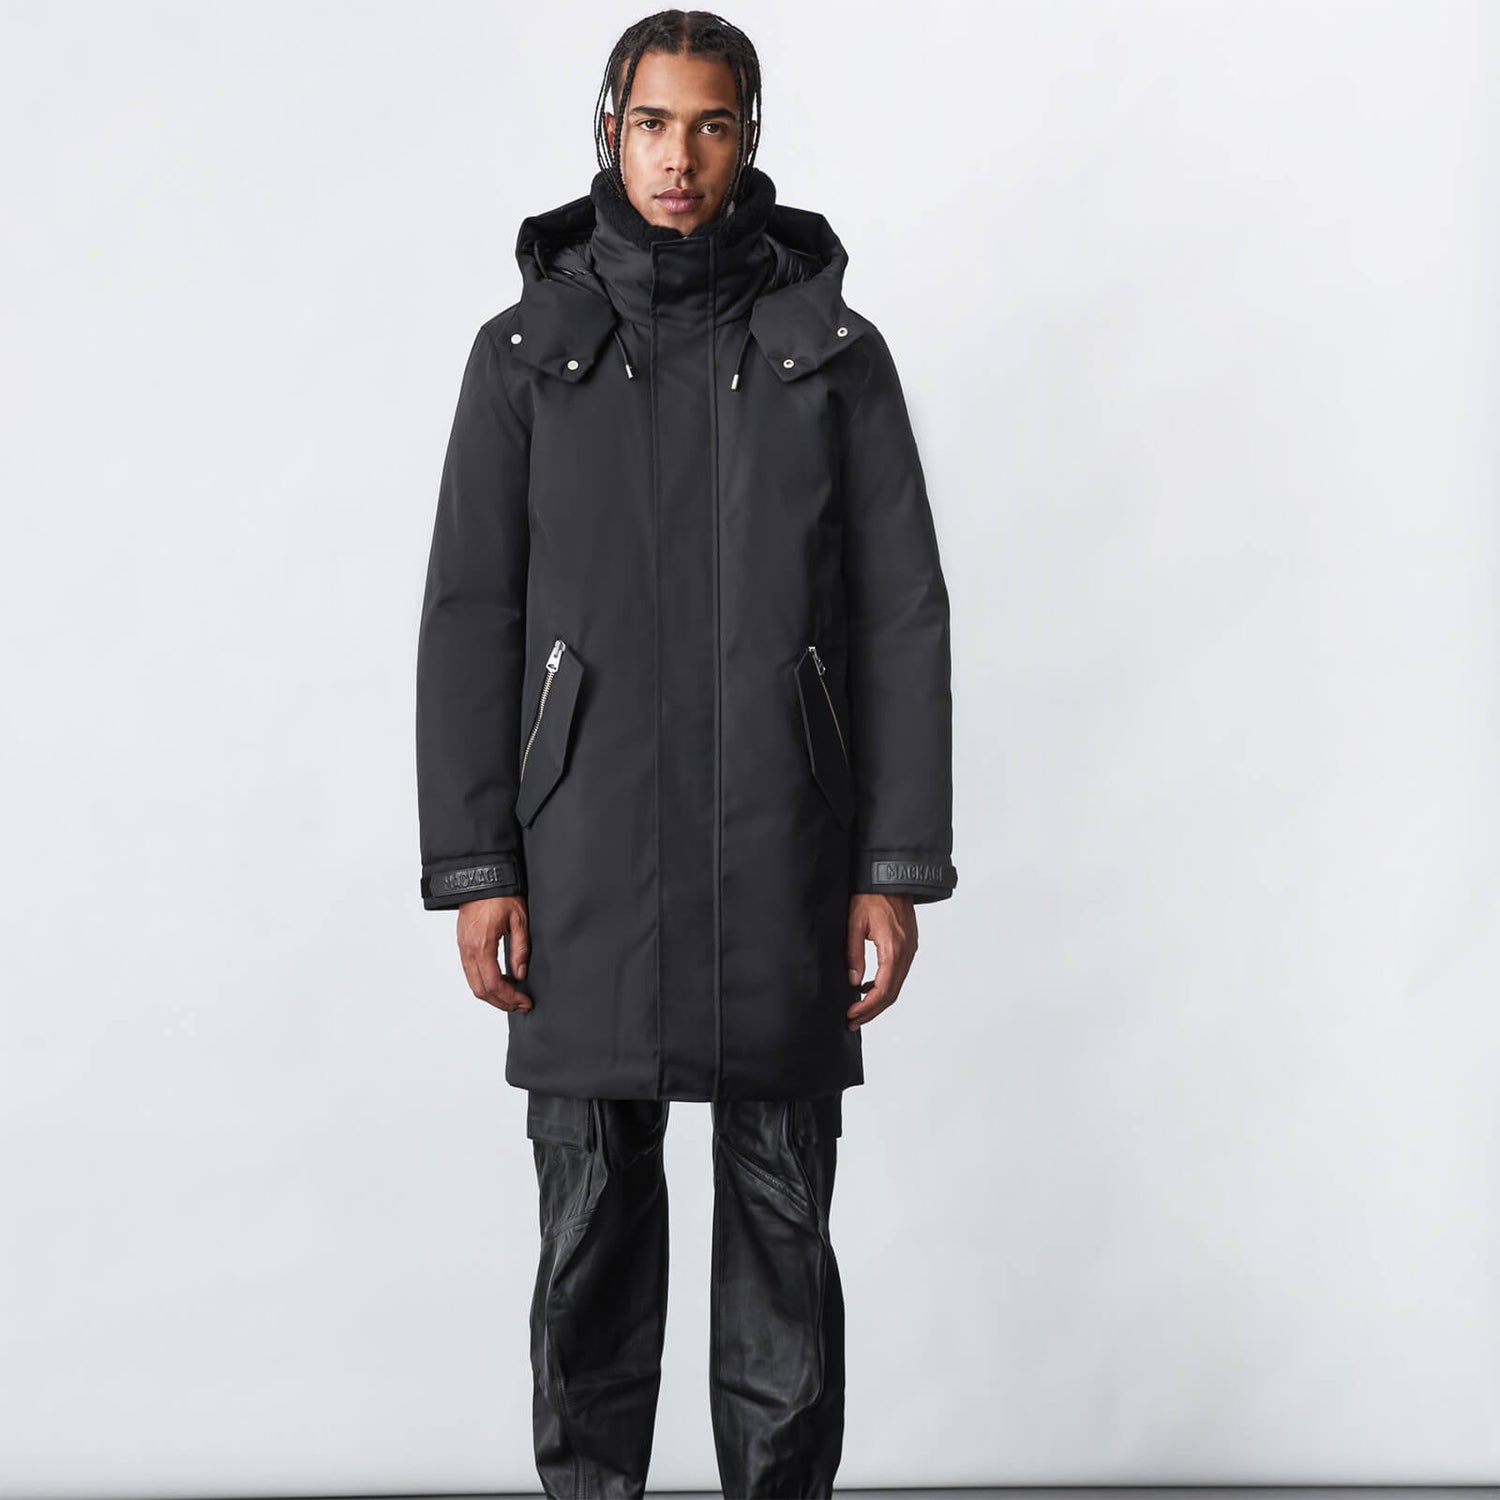 Mackage Men's Kason Long Hooded Coat - Black - 36/XS